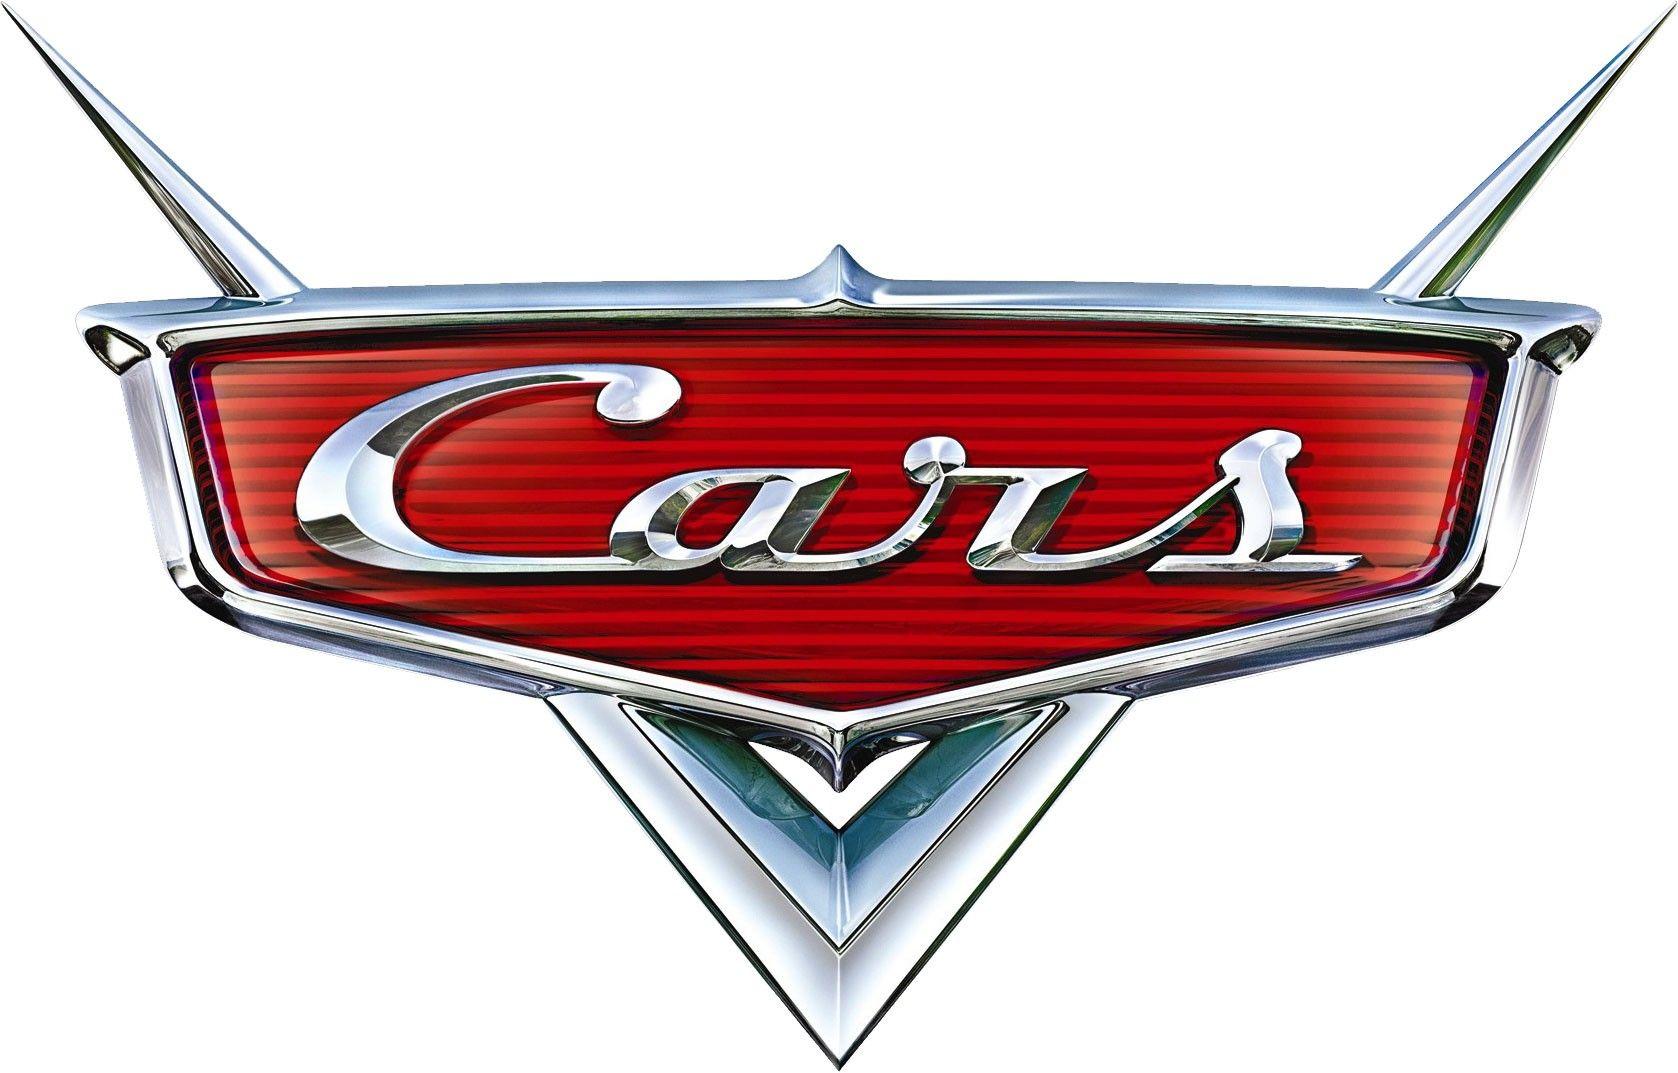 Disney Cars 1 Logo - DISNEY CARS MOVIE TOYS On Sale at ToyWiz.com - Buy Disney Pixar Cars ...